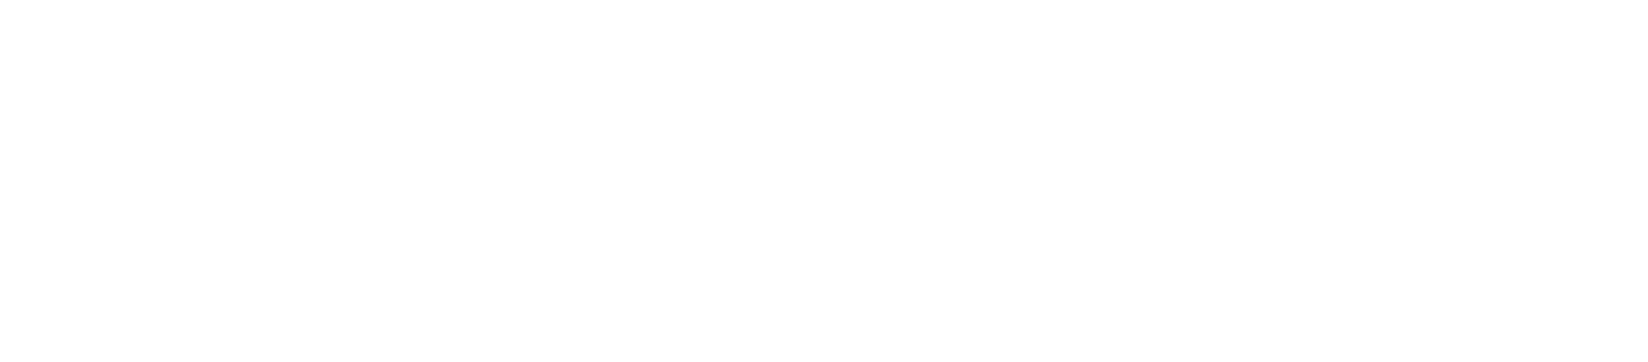 ford and qmerit logos